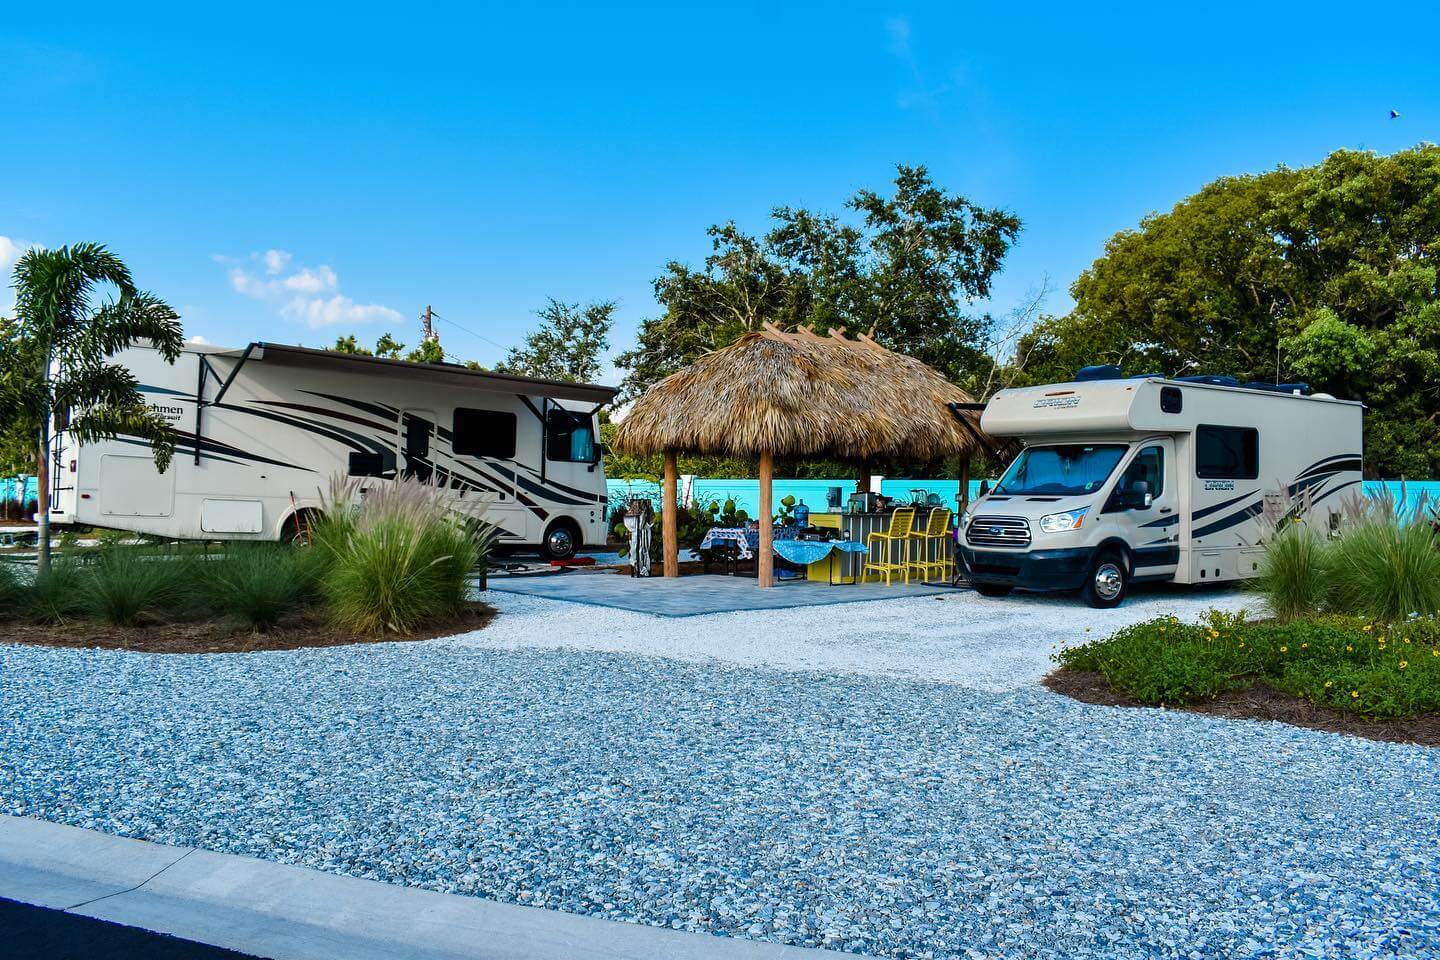 Camp Margaritaville Rv Resort near Winter Haven Florida. 